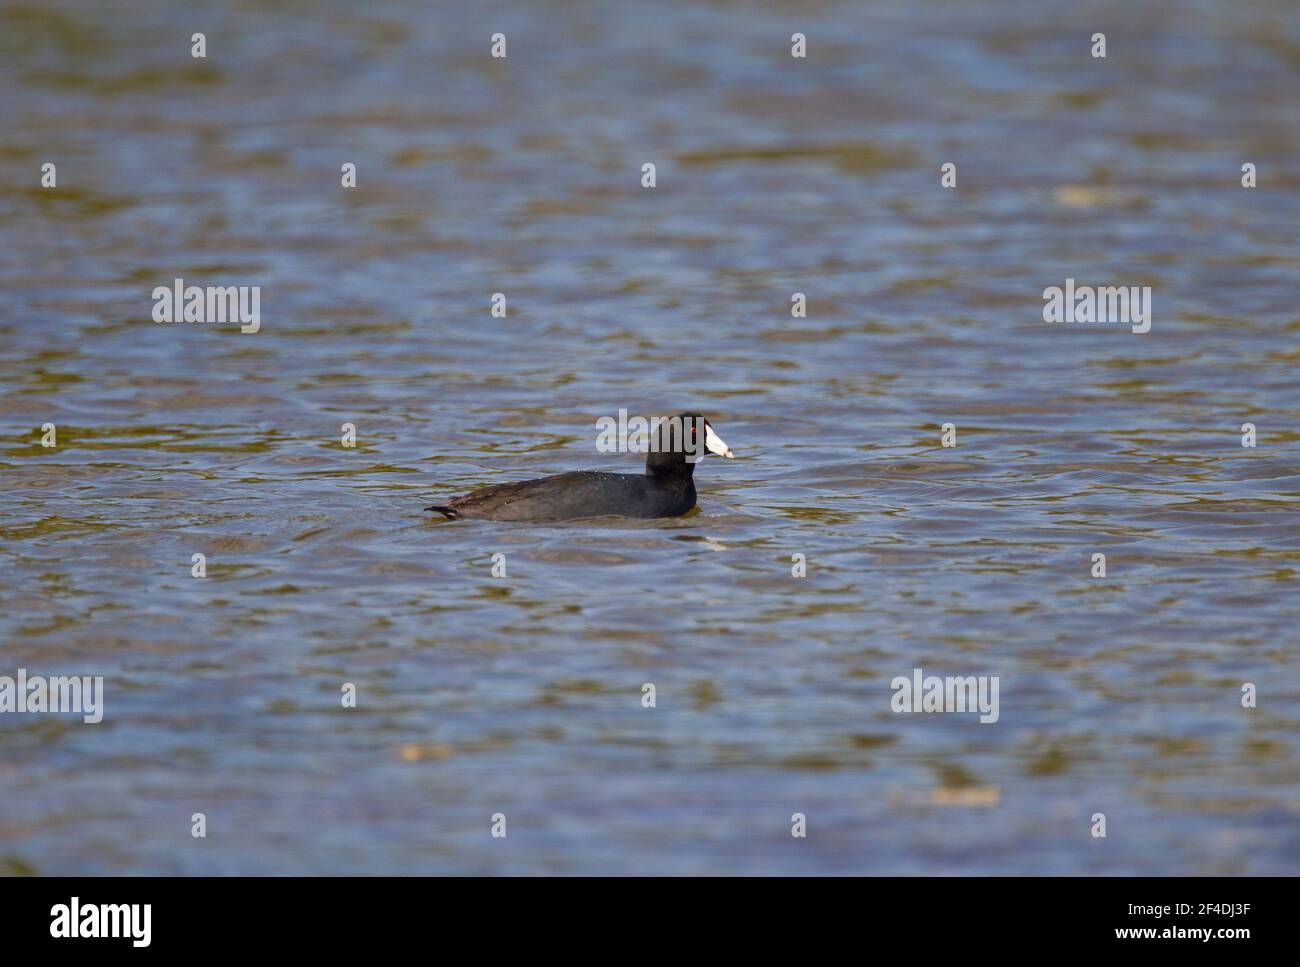 American Coot, Fulica americana, single adult swimming in lagoon, Zapata Swamp, Matanzas Province, Cuba Stock Photo